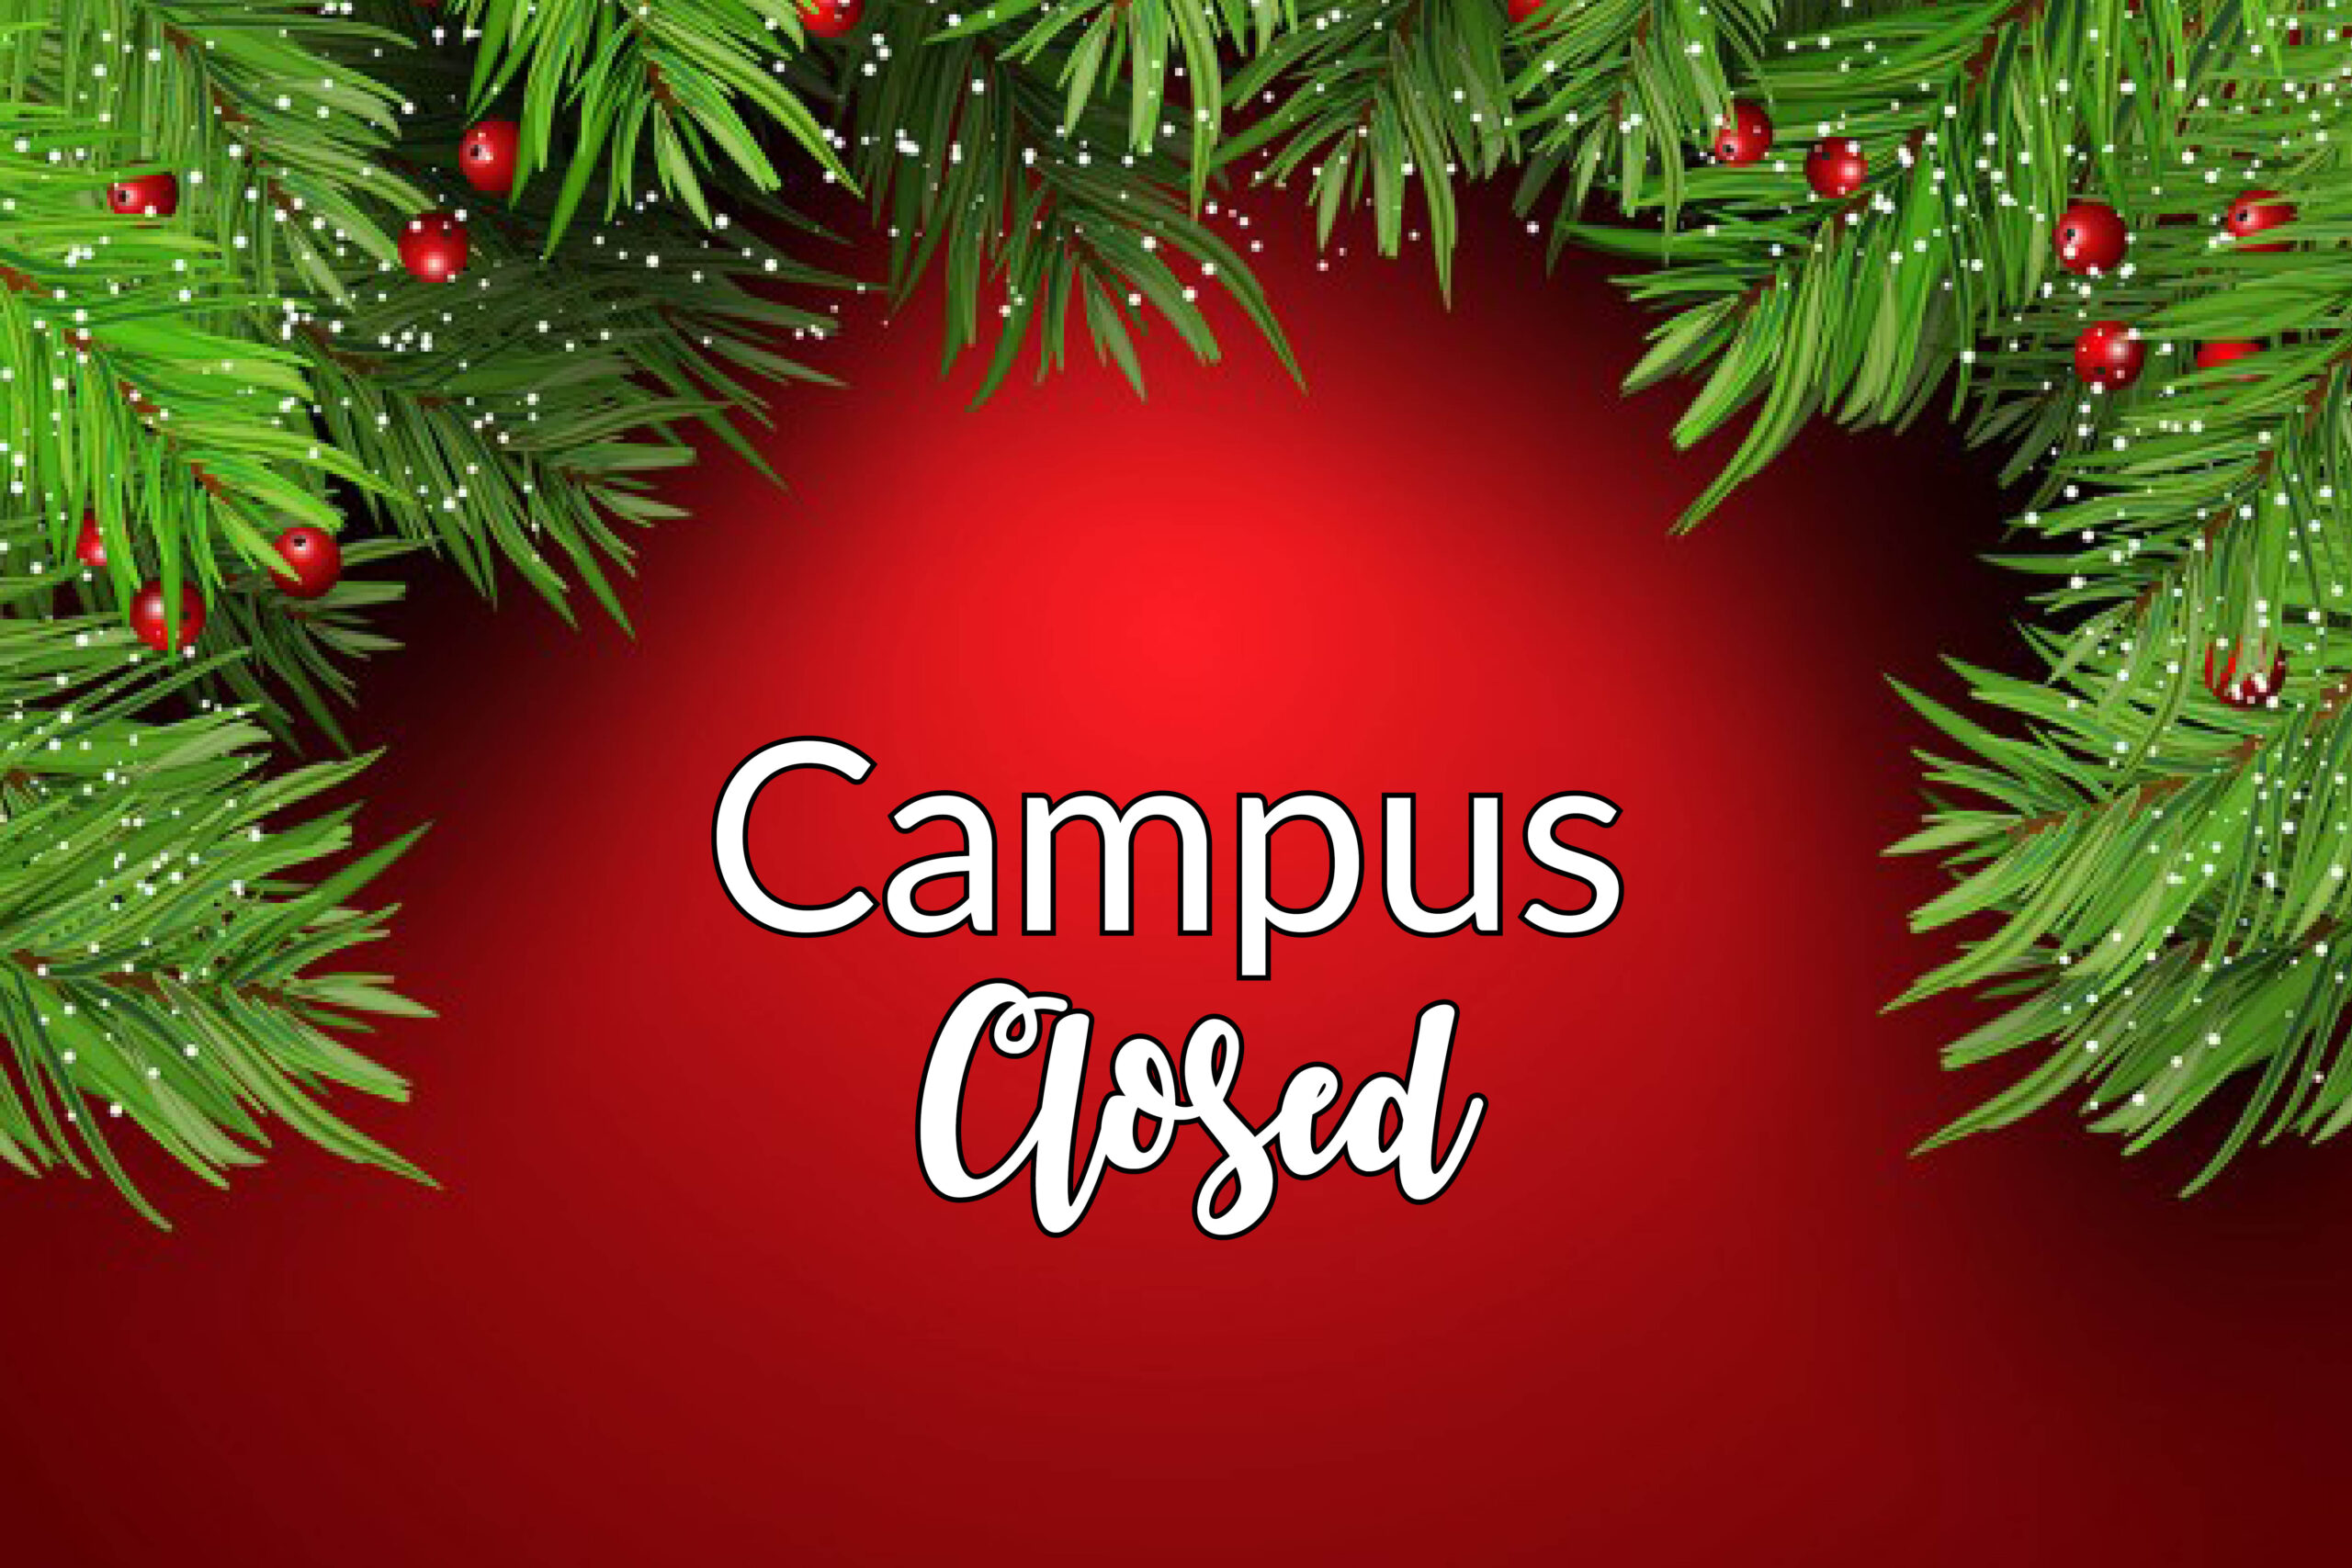 Campus Closed - Winter Theme